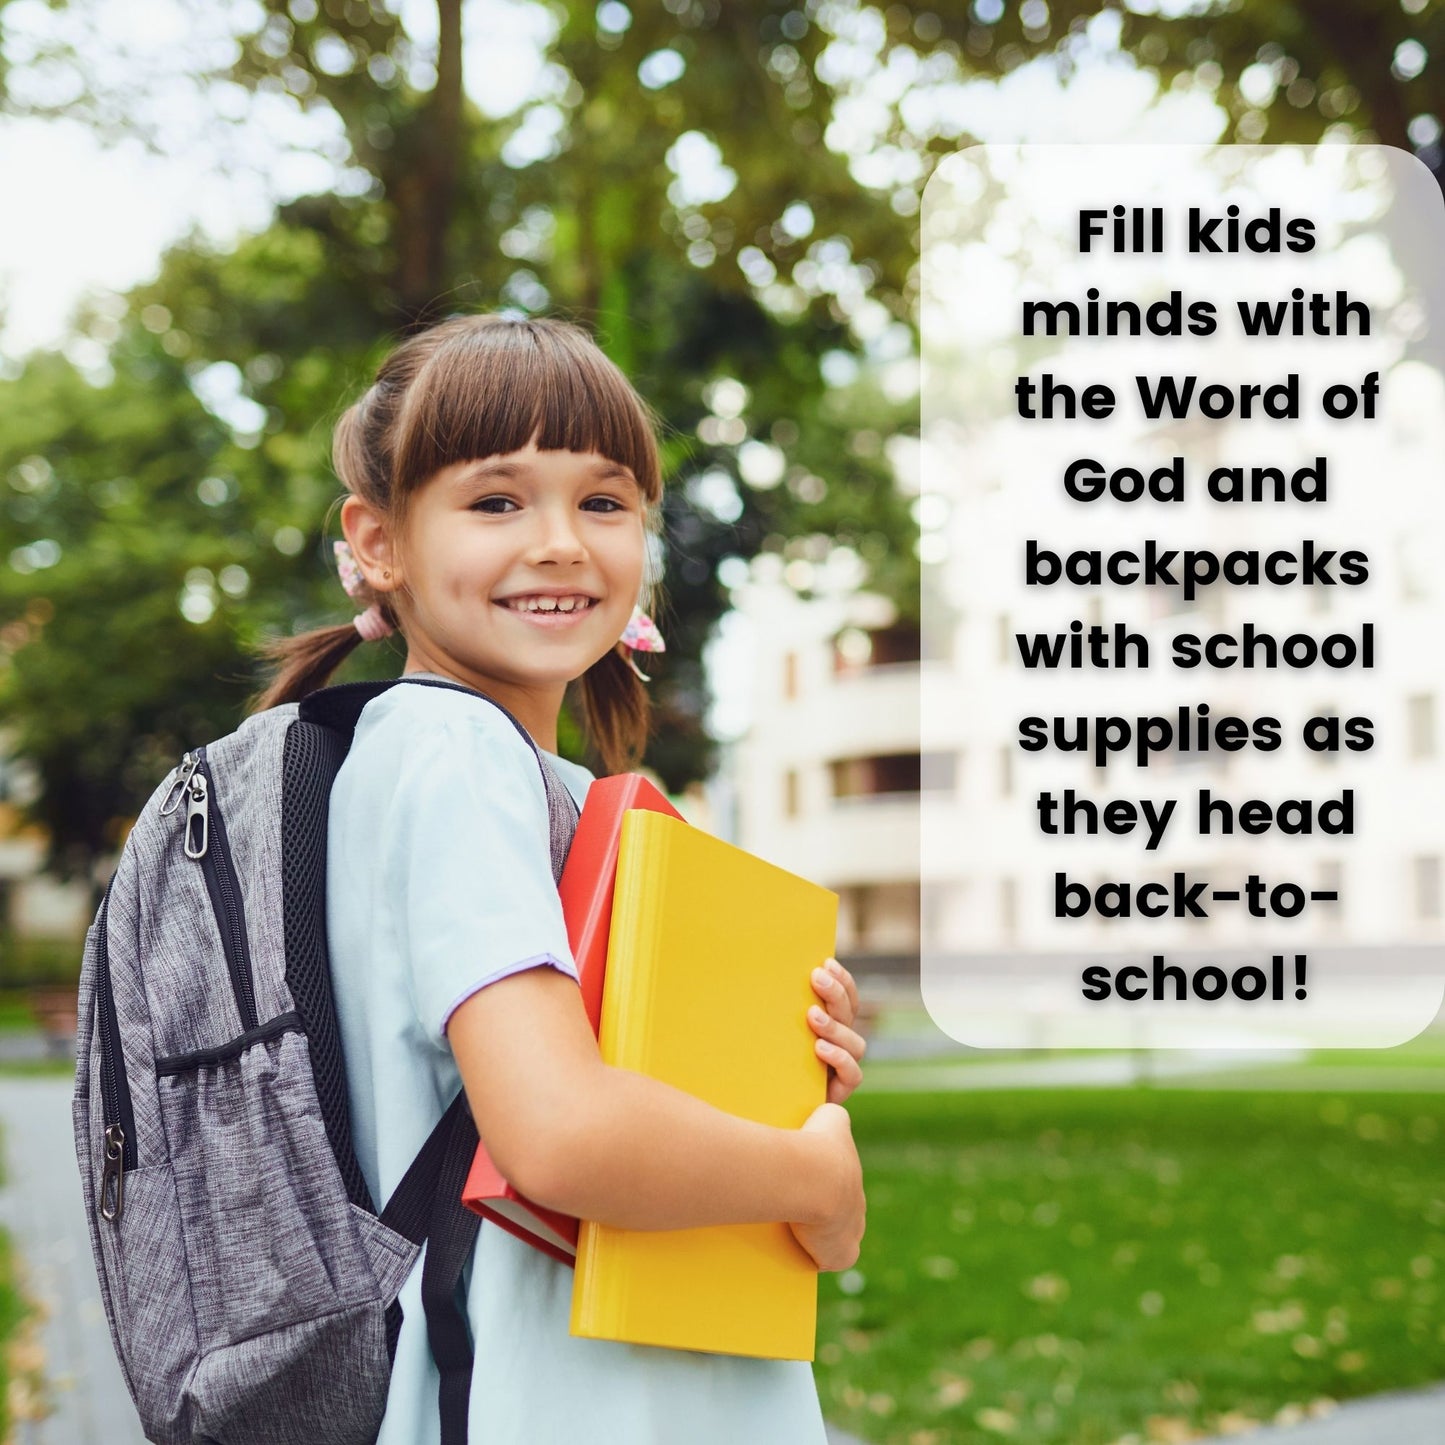 Back to School with Jesus - Gospel Printables